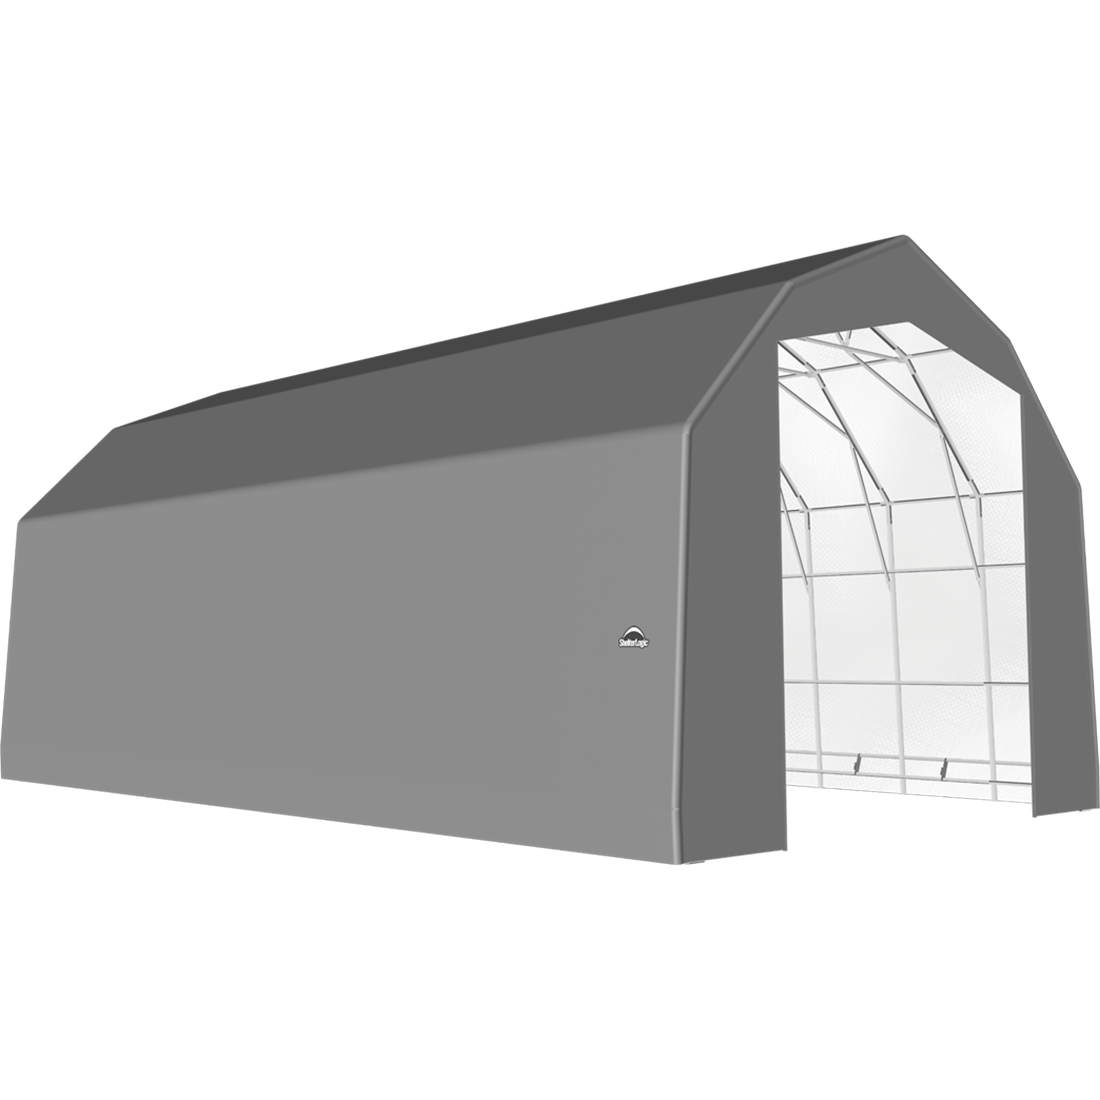 ShelterTech SP Series Barn Shelter, 25 ft. x 48 ft. x 20 ft. Heavy Duty PVC 14.5 oz. Gray